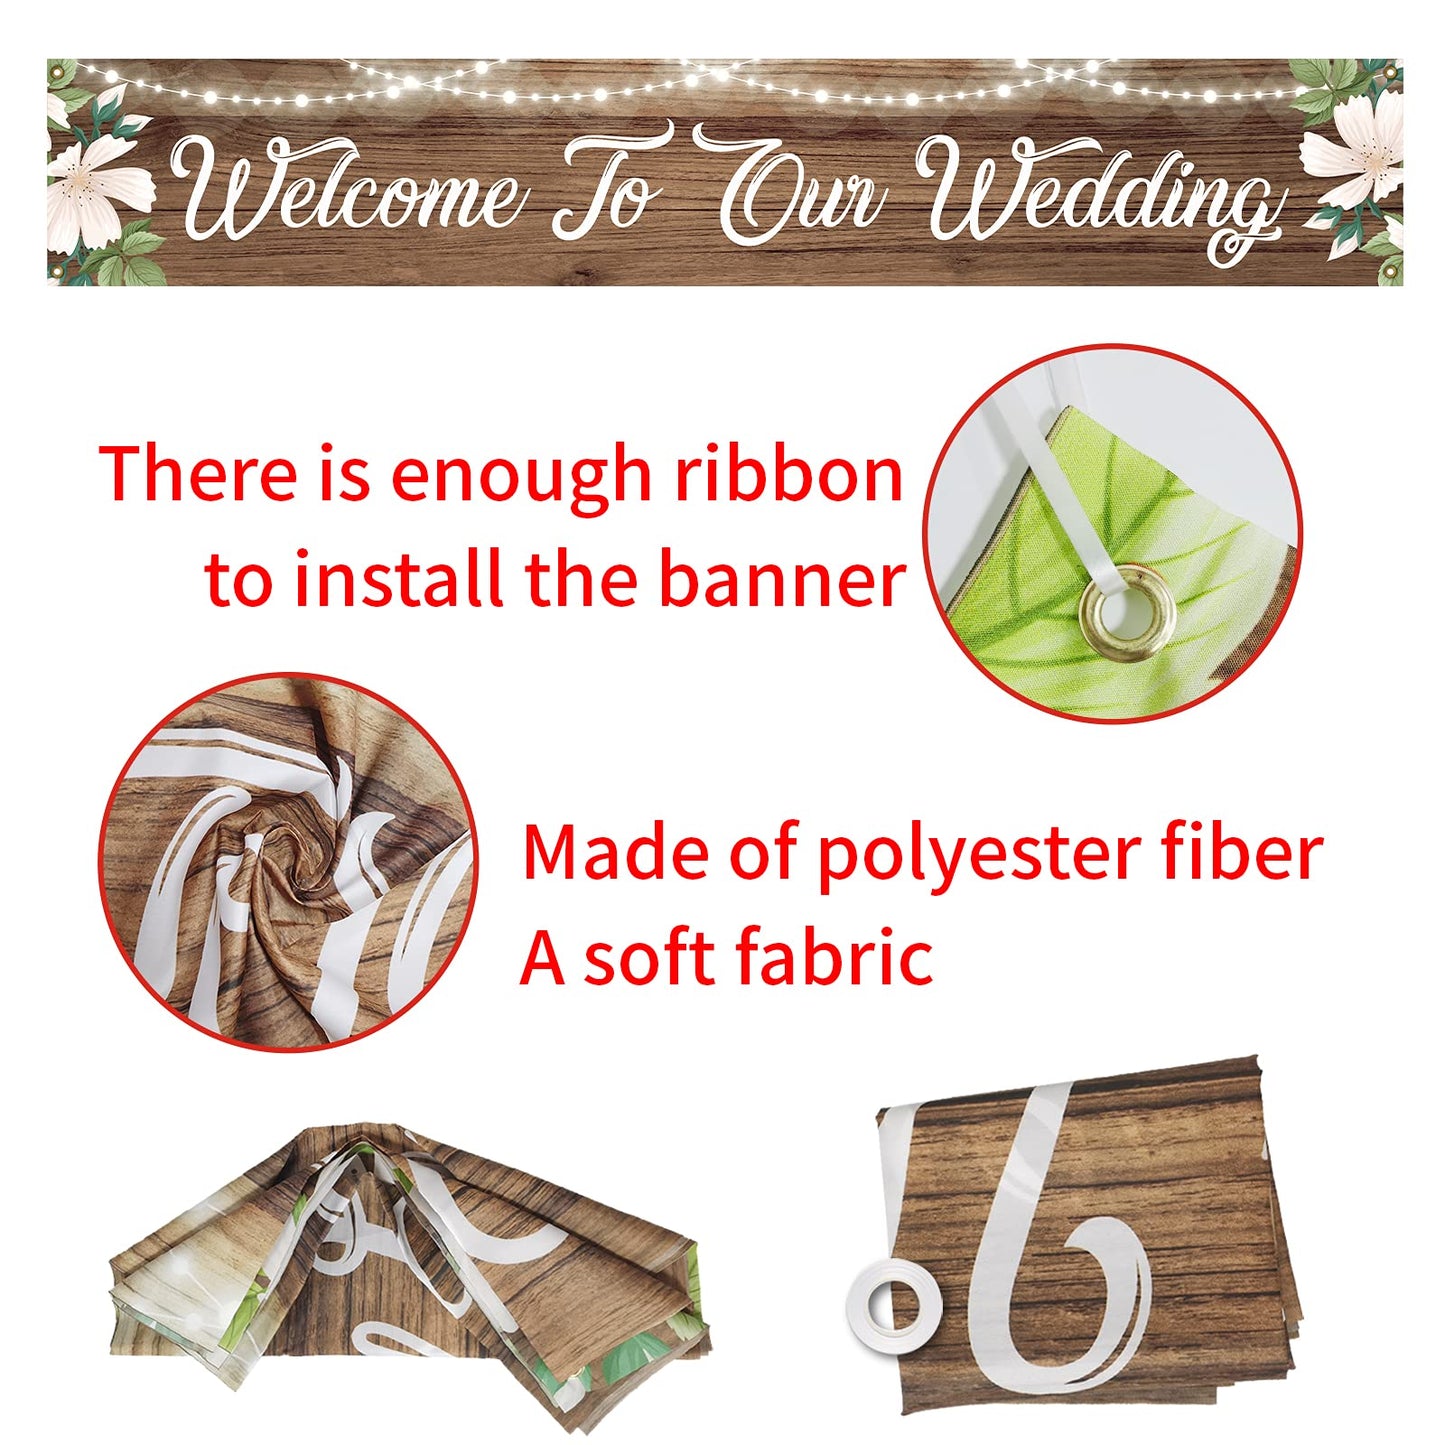 Polyester fabric wedding banner